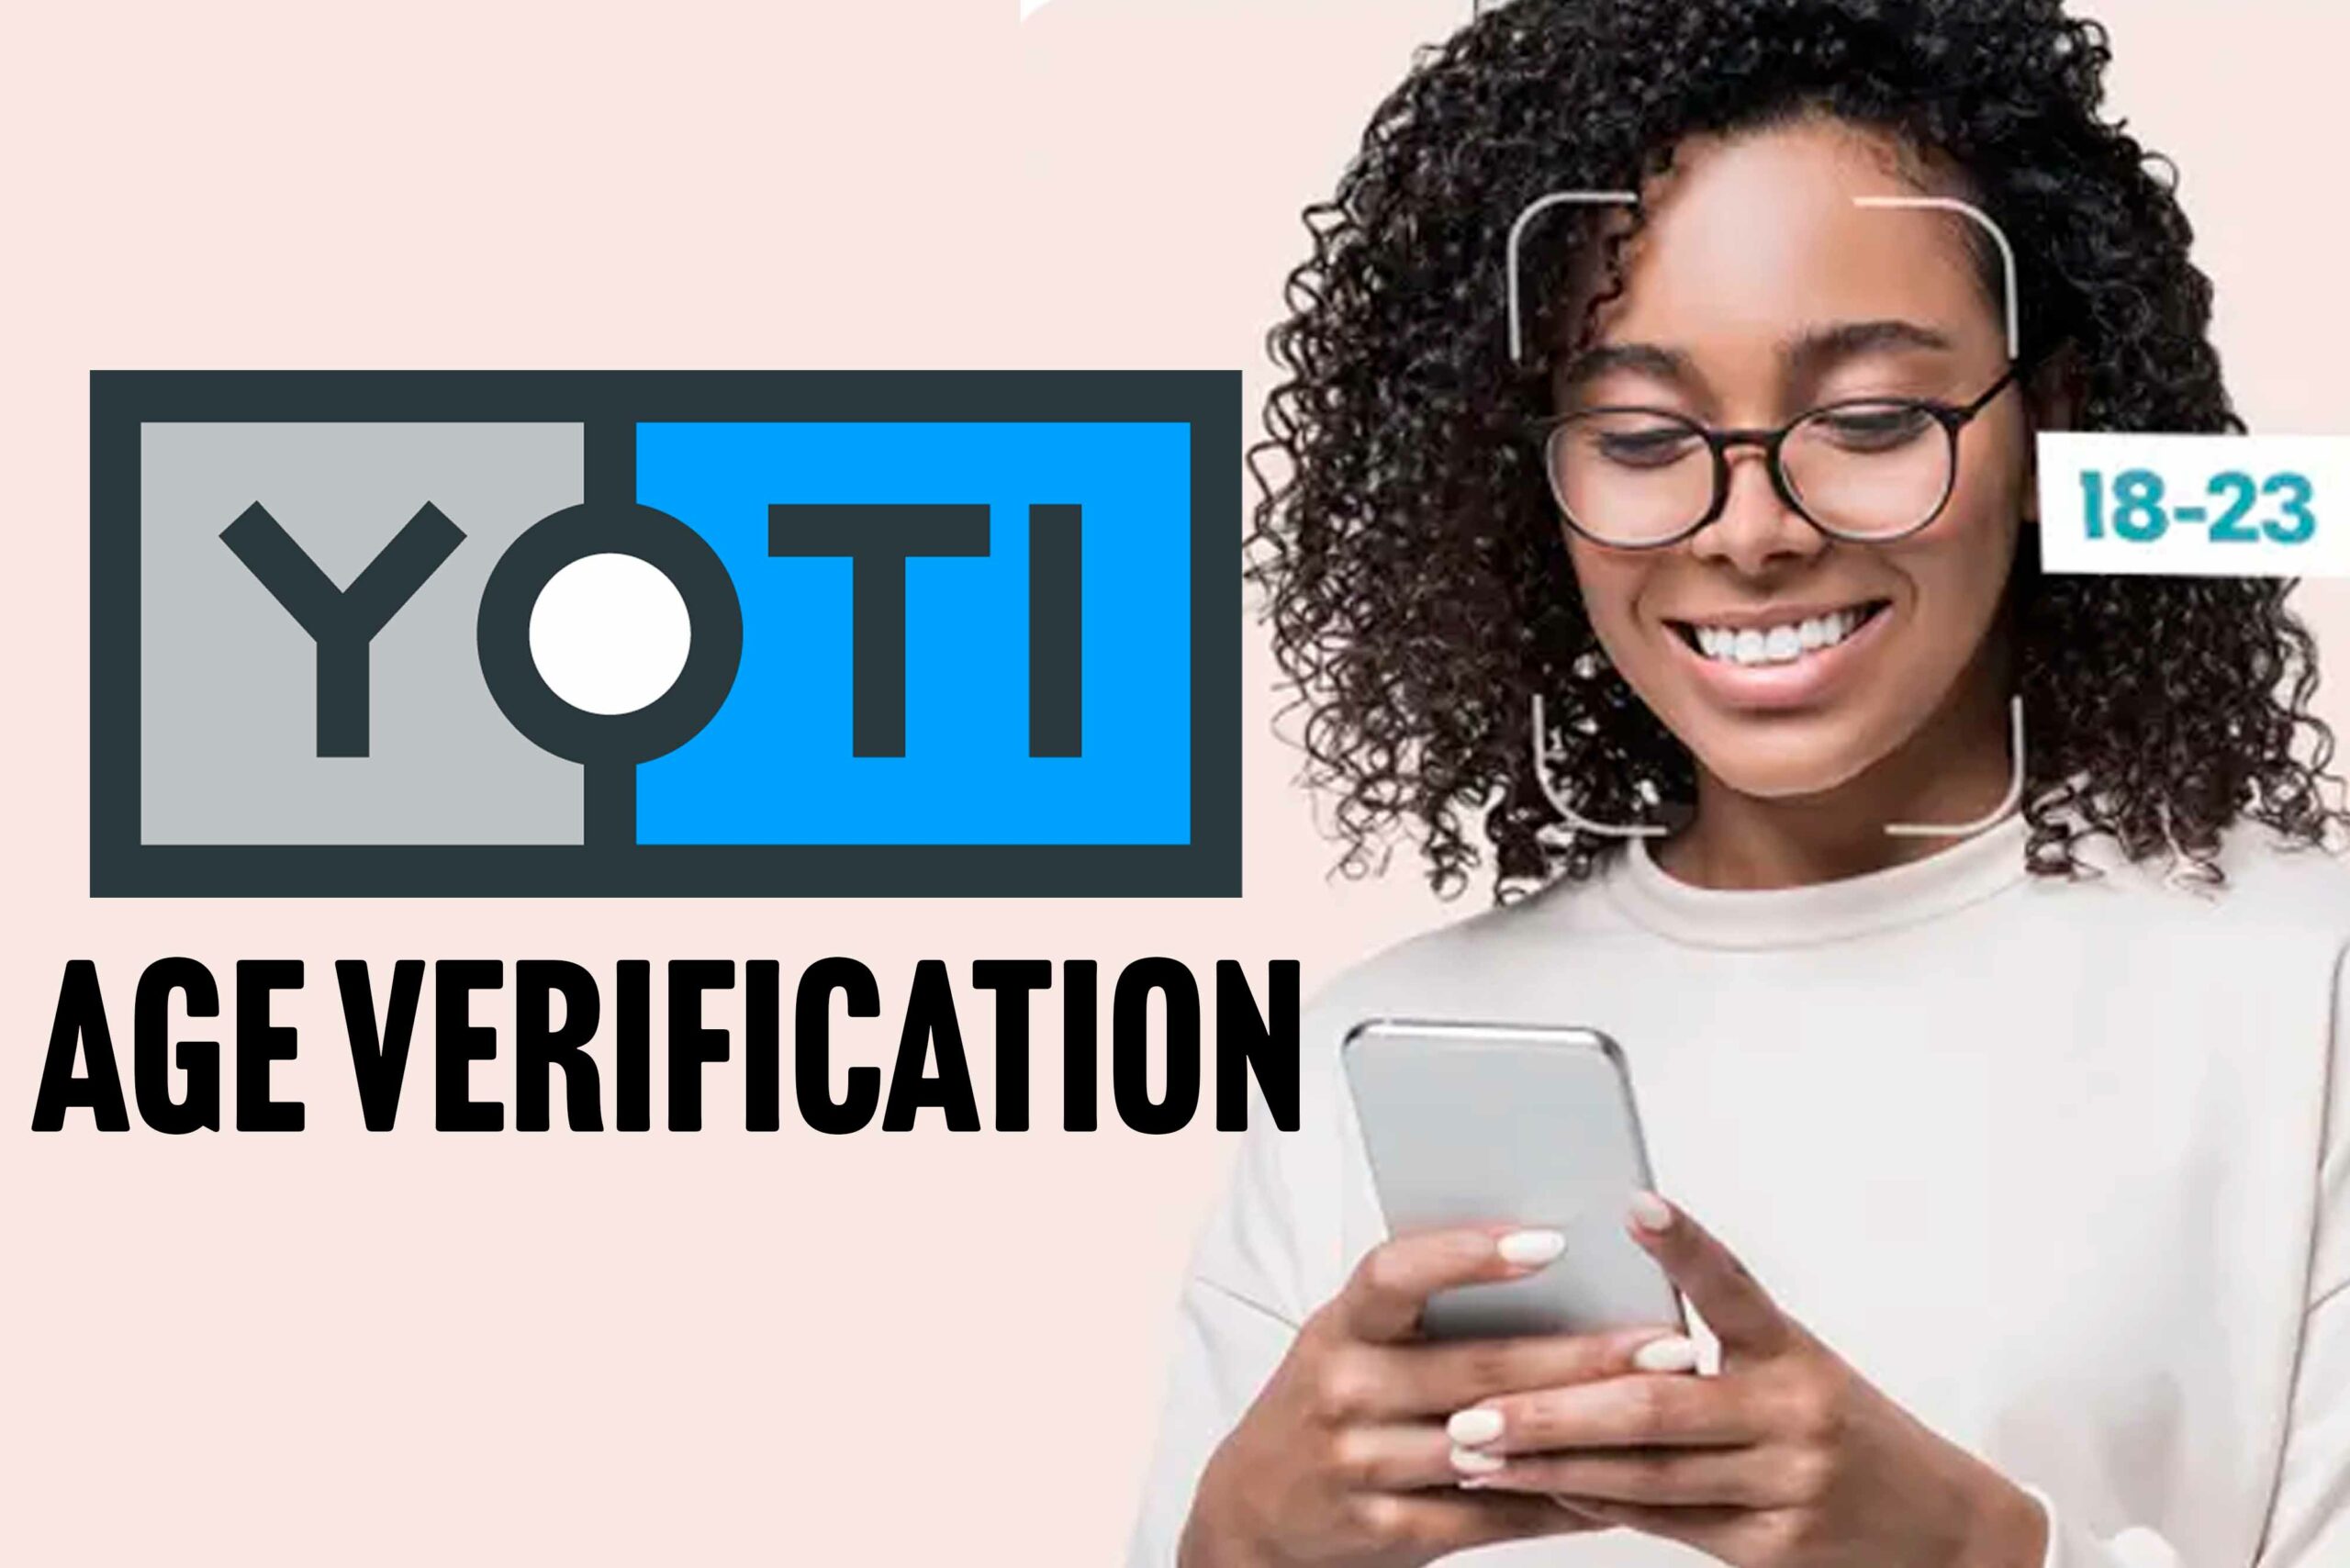 Yoti Age Verification